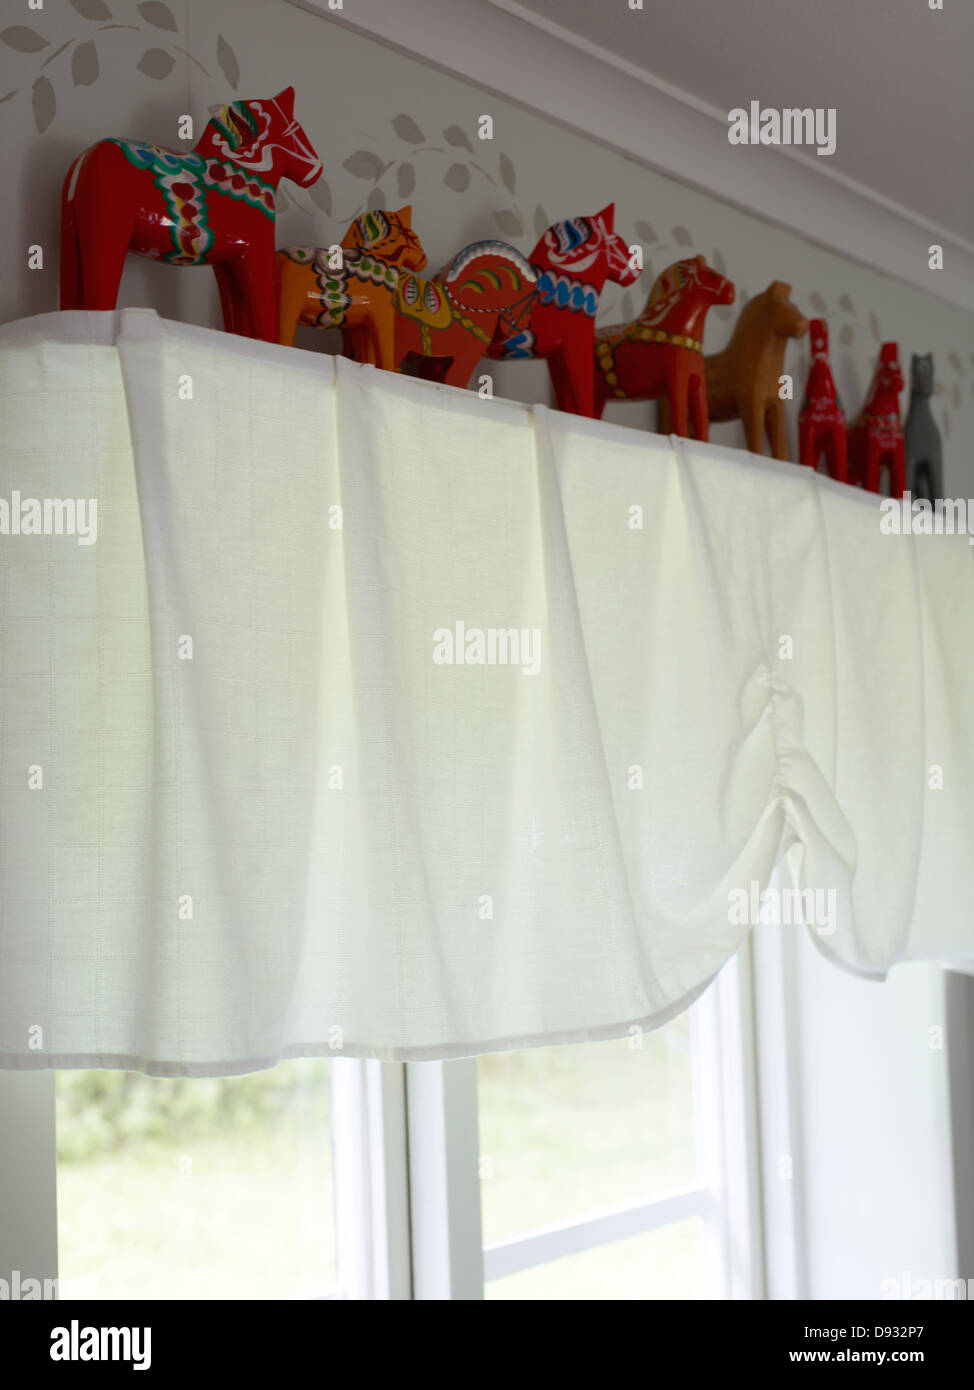 Traditional Scandinavian toy horses on shelf above window Stock Photo